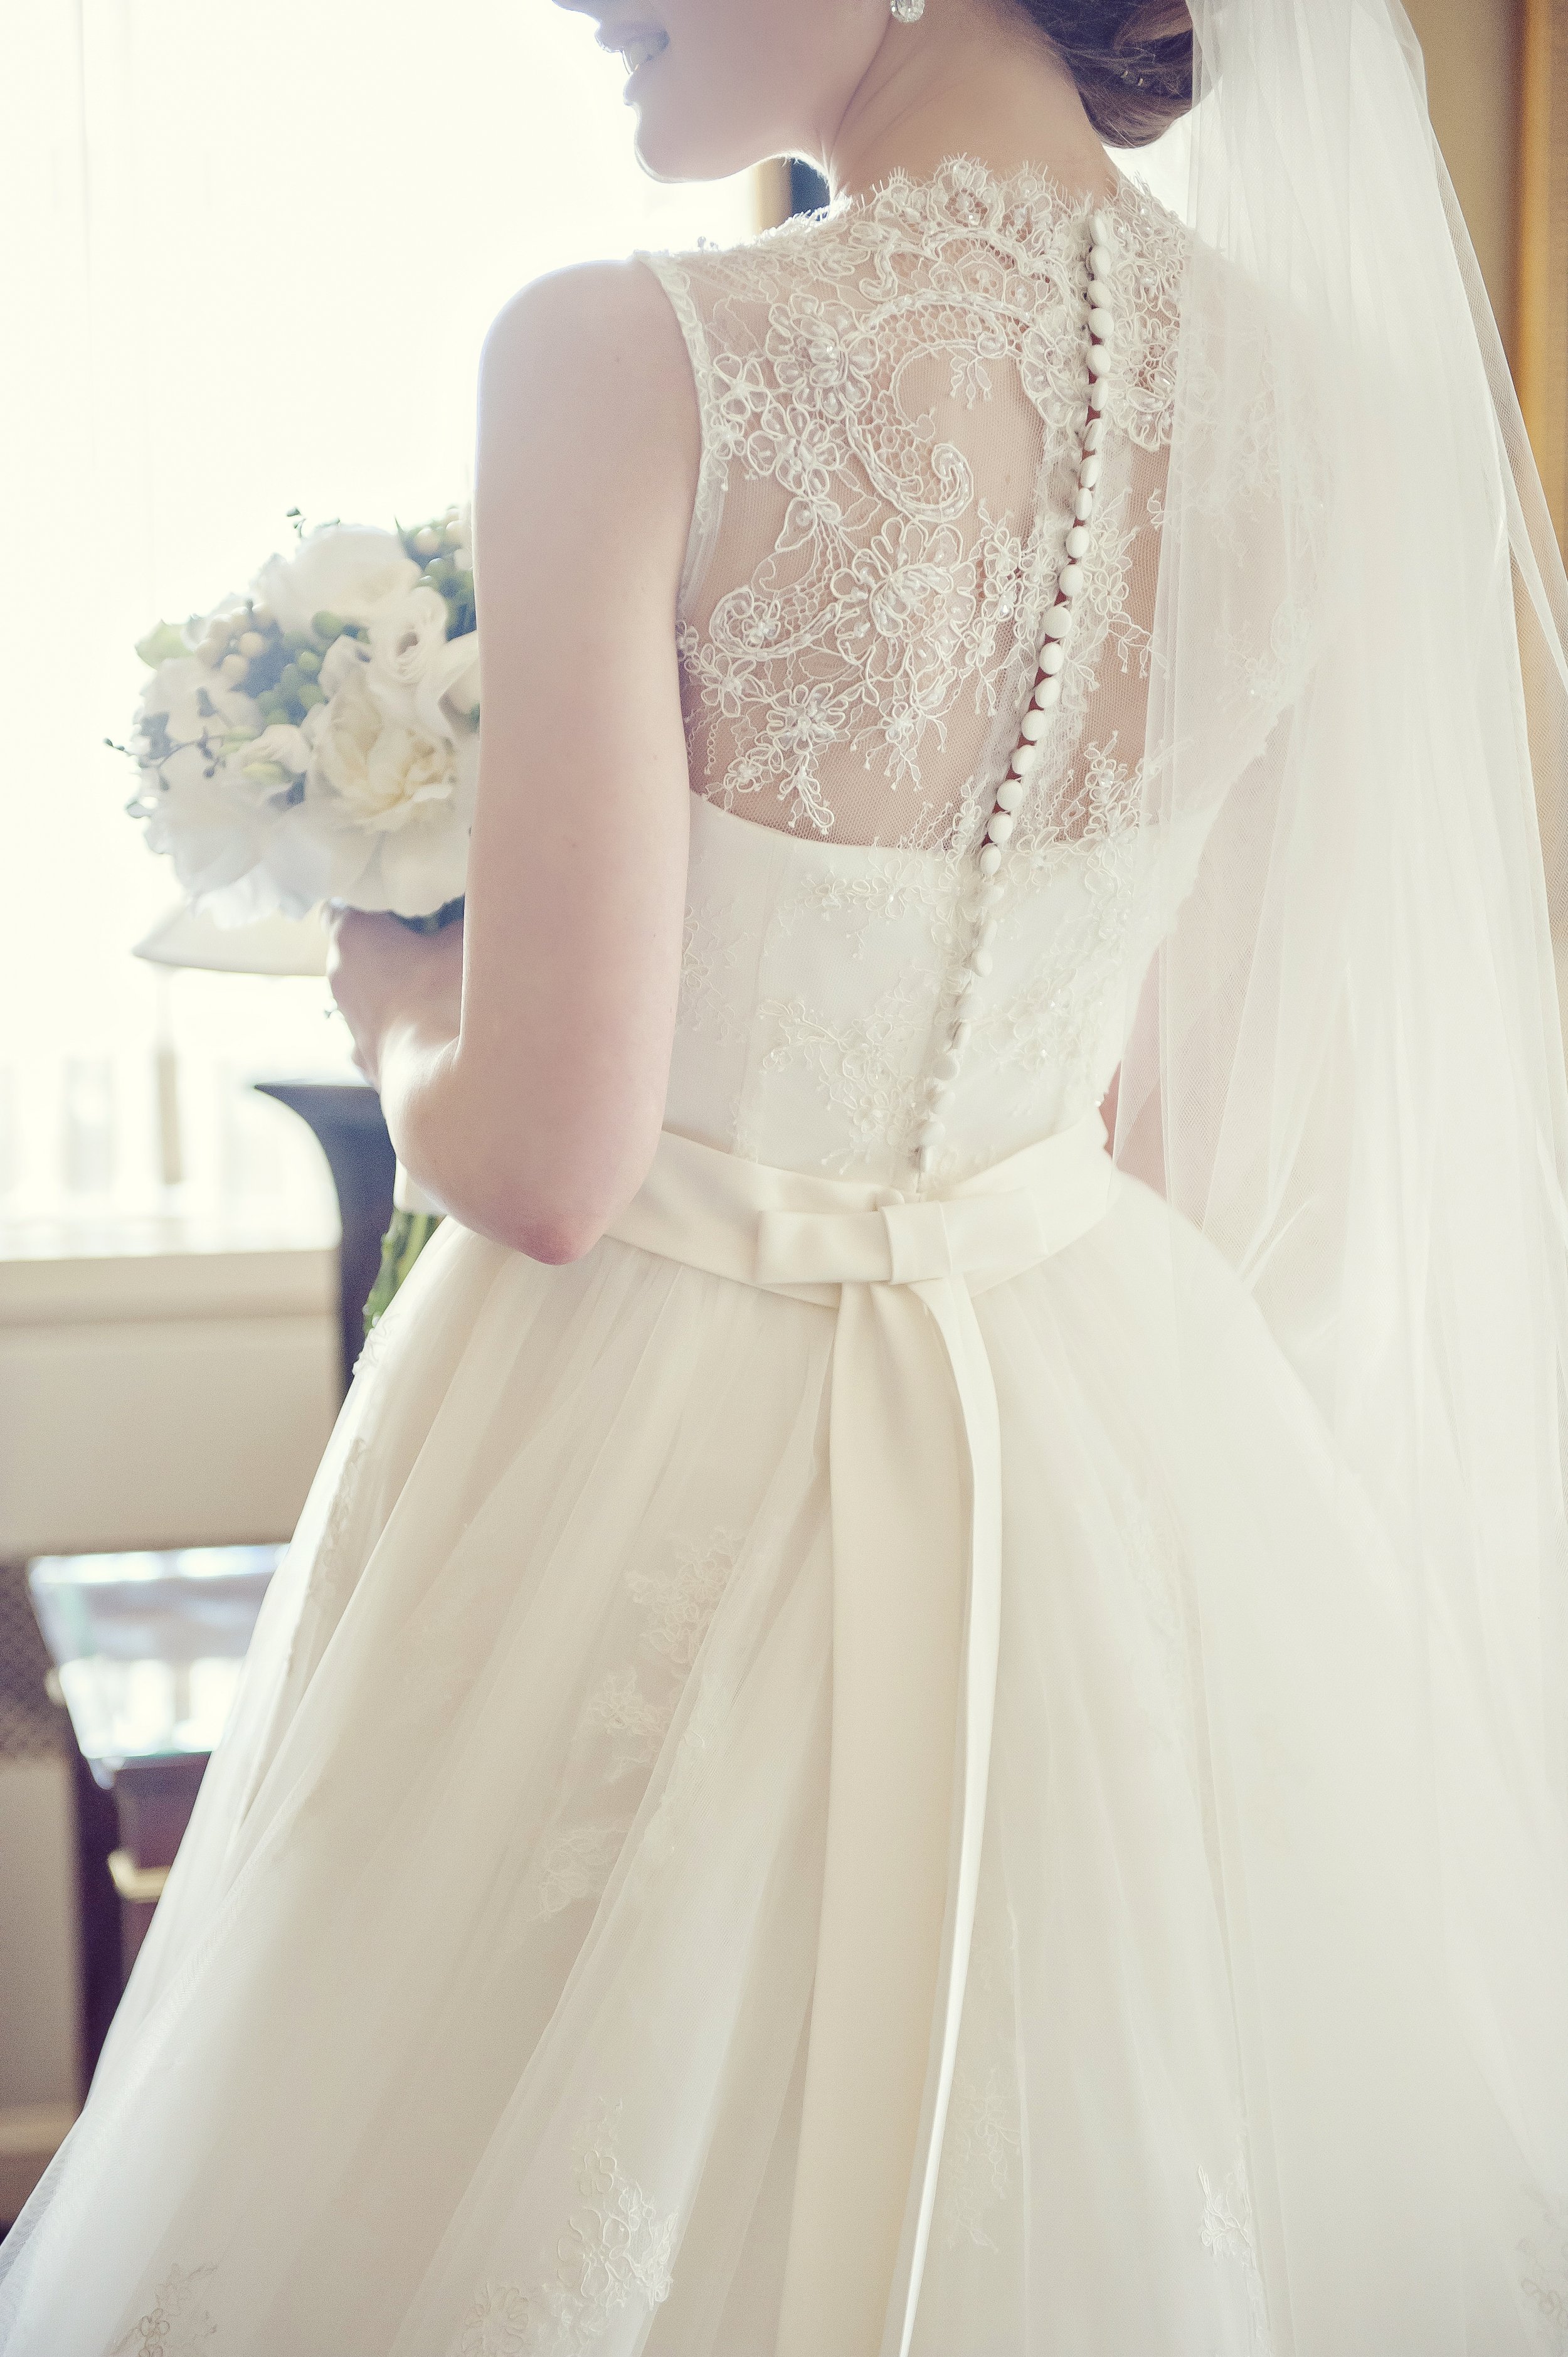 A wedding dress by Monique Lhuillier